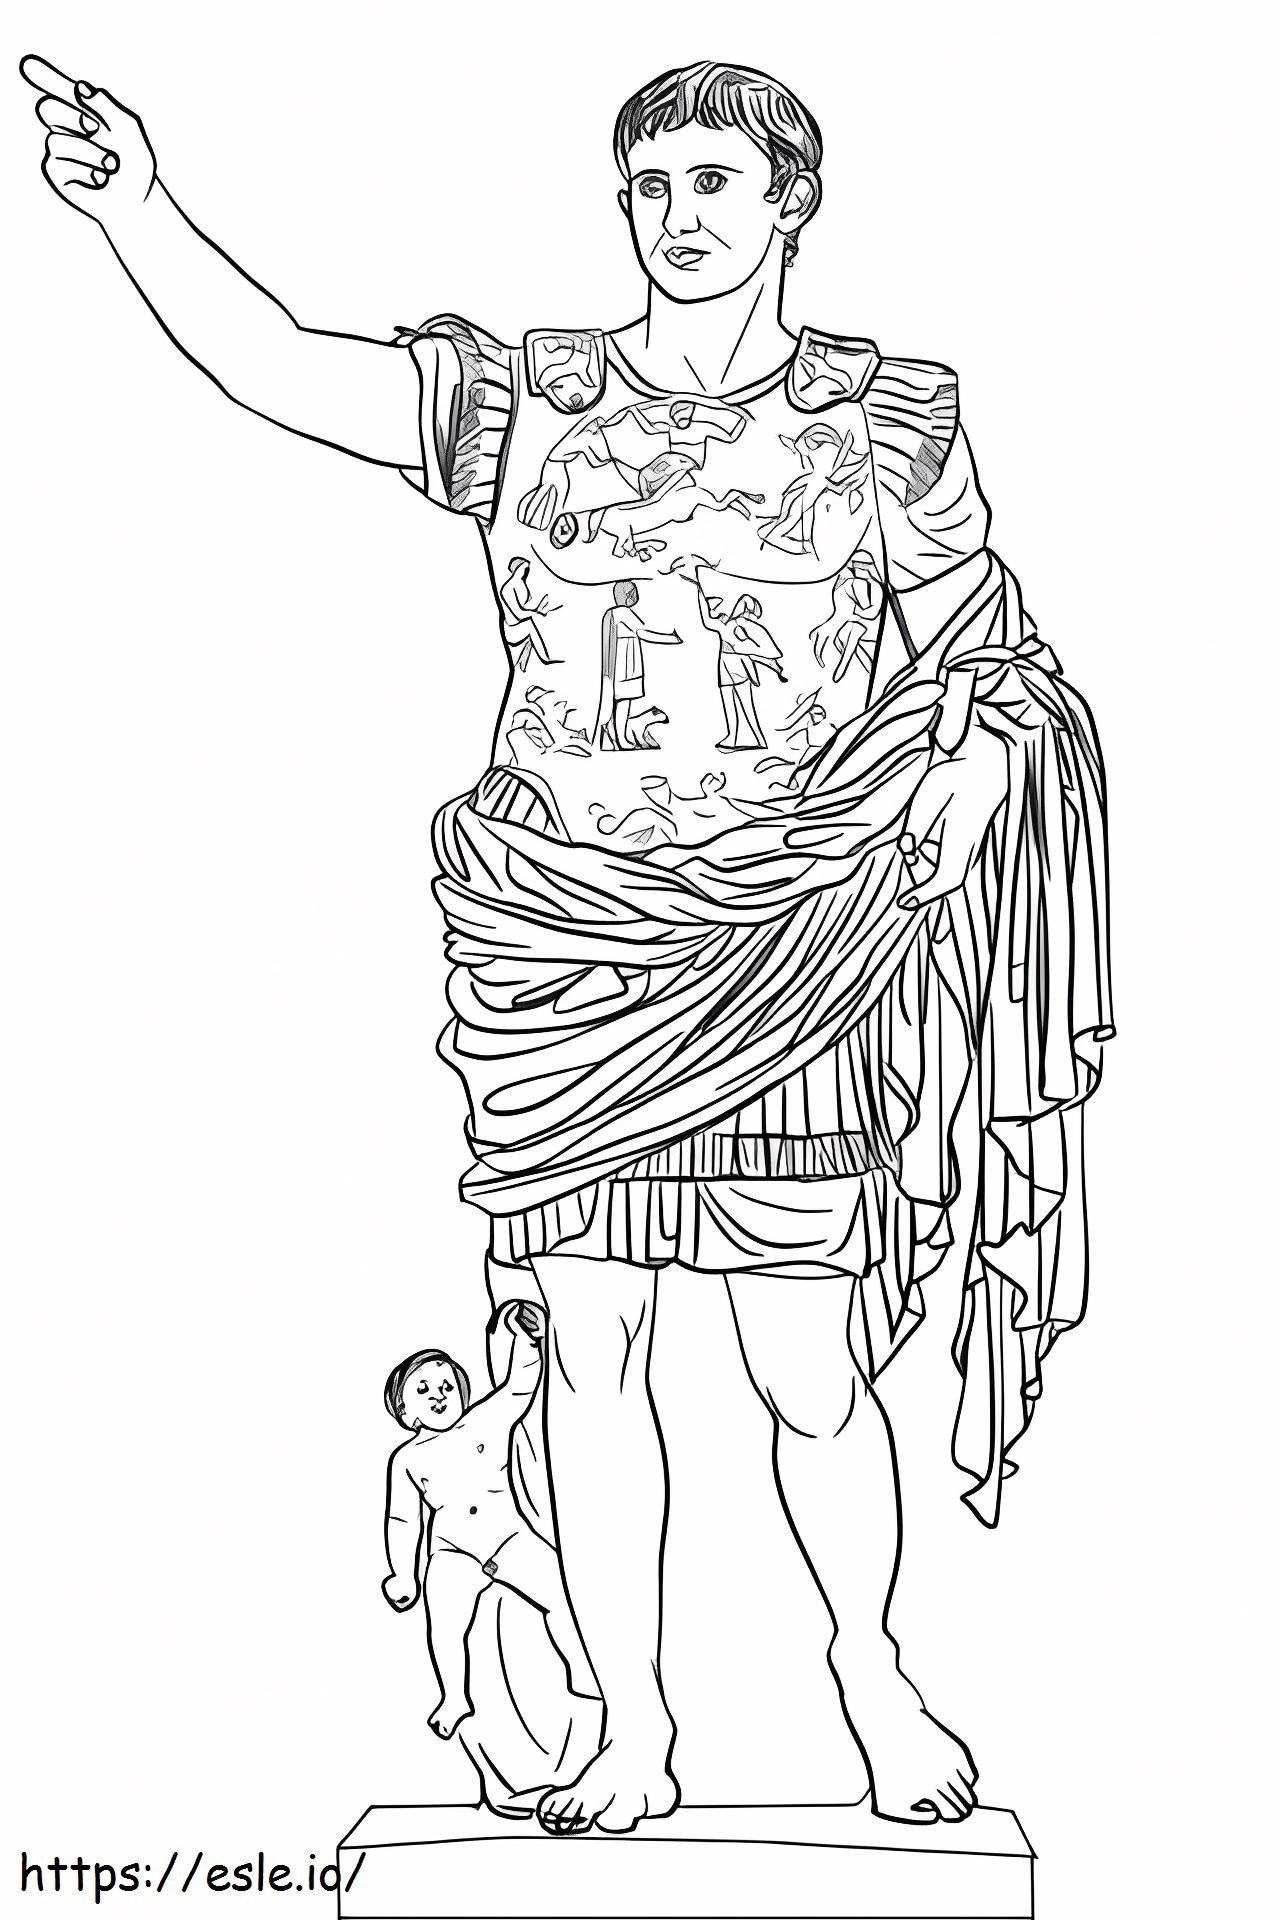 Estátua de Augusto César para colorir